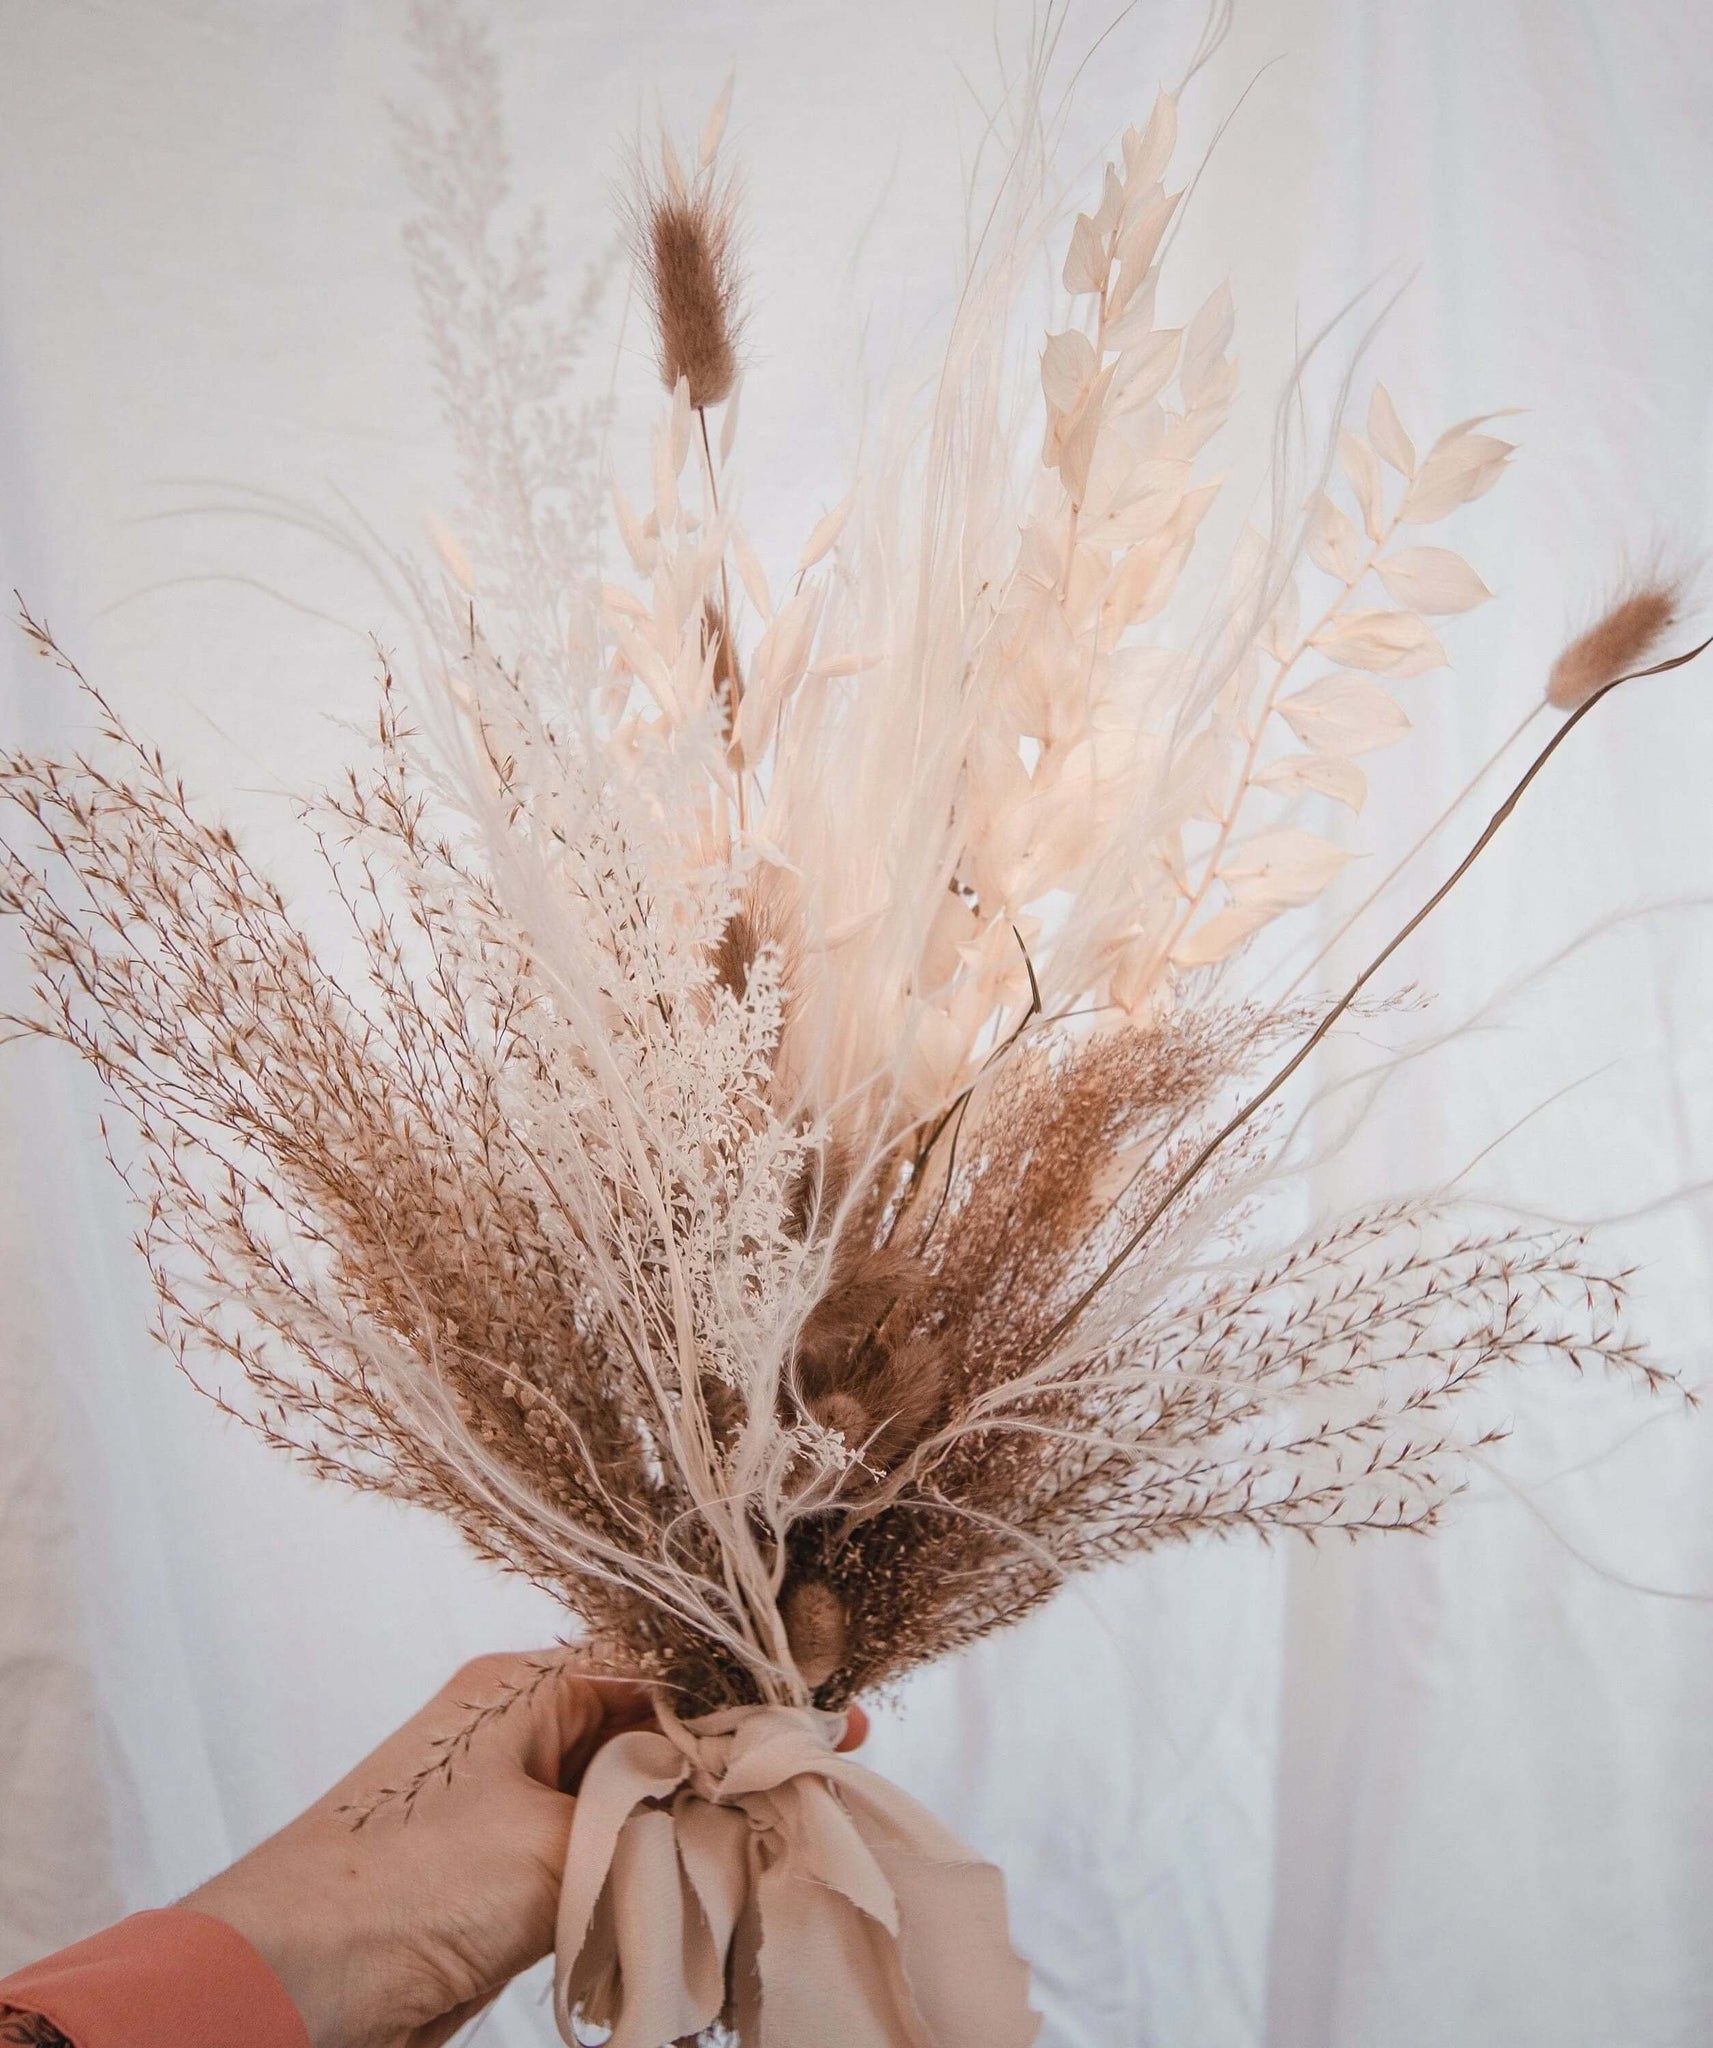 Dried wheat vintage flower arrangements for weddings from Hidden Botanics.